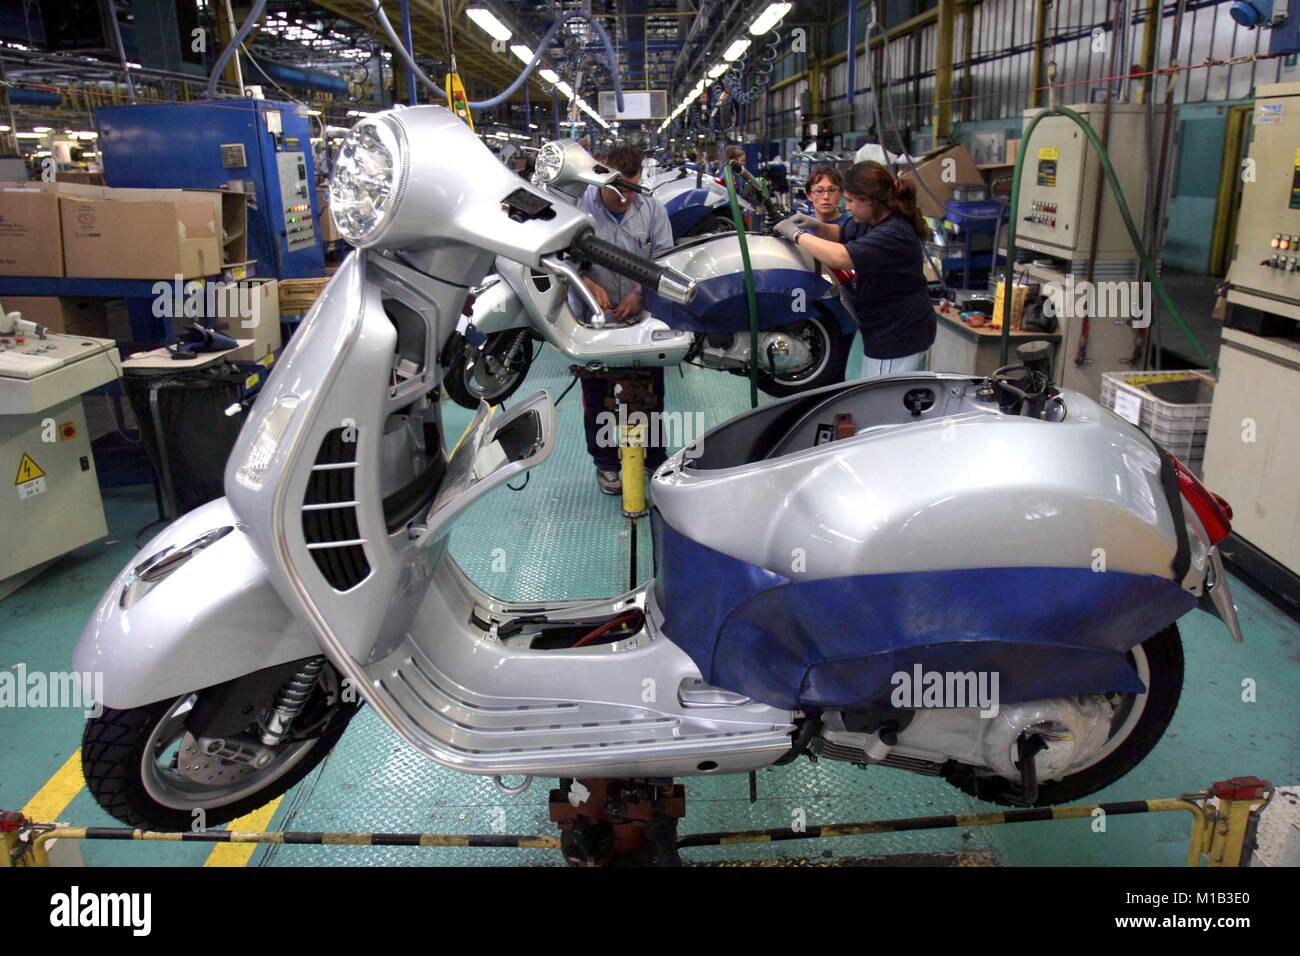 La production de l'usine Piaggio, motos et scooters, Pontedera, Pise, Italie © Riccardo Squillantini/Sintesi/Alamy Stock Photo Banque D'Images